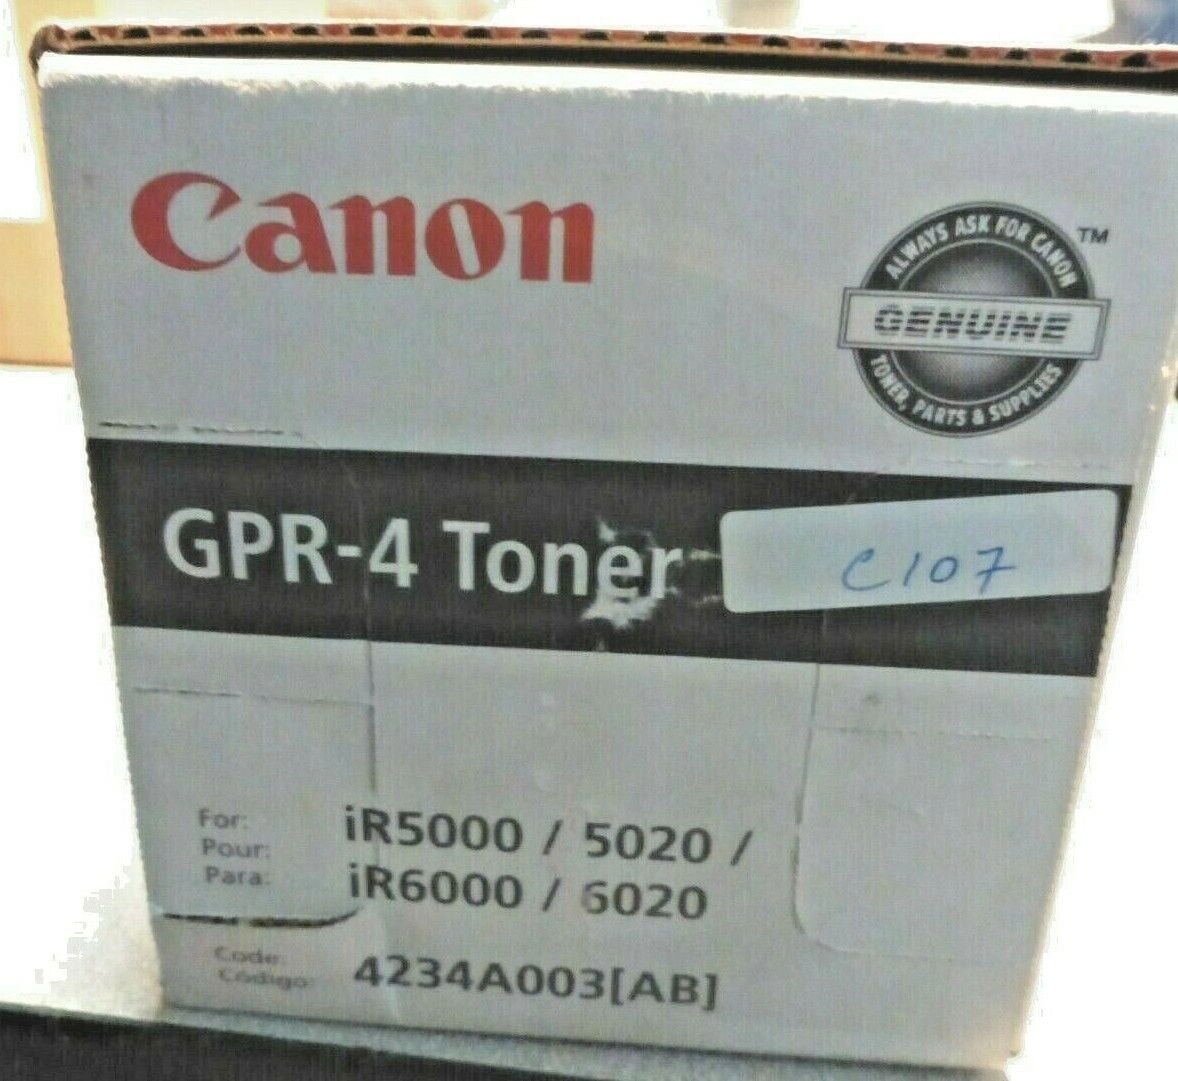 ORIGINAL CANON GPR4- TONER CARTRIDGE-FOR iR 5000, 